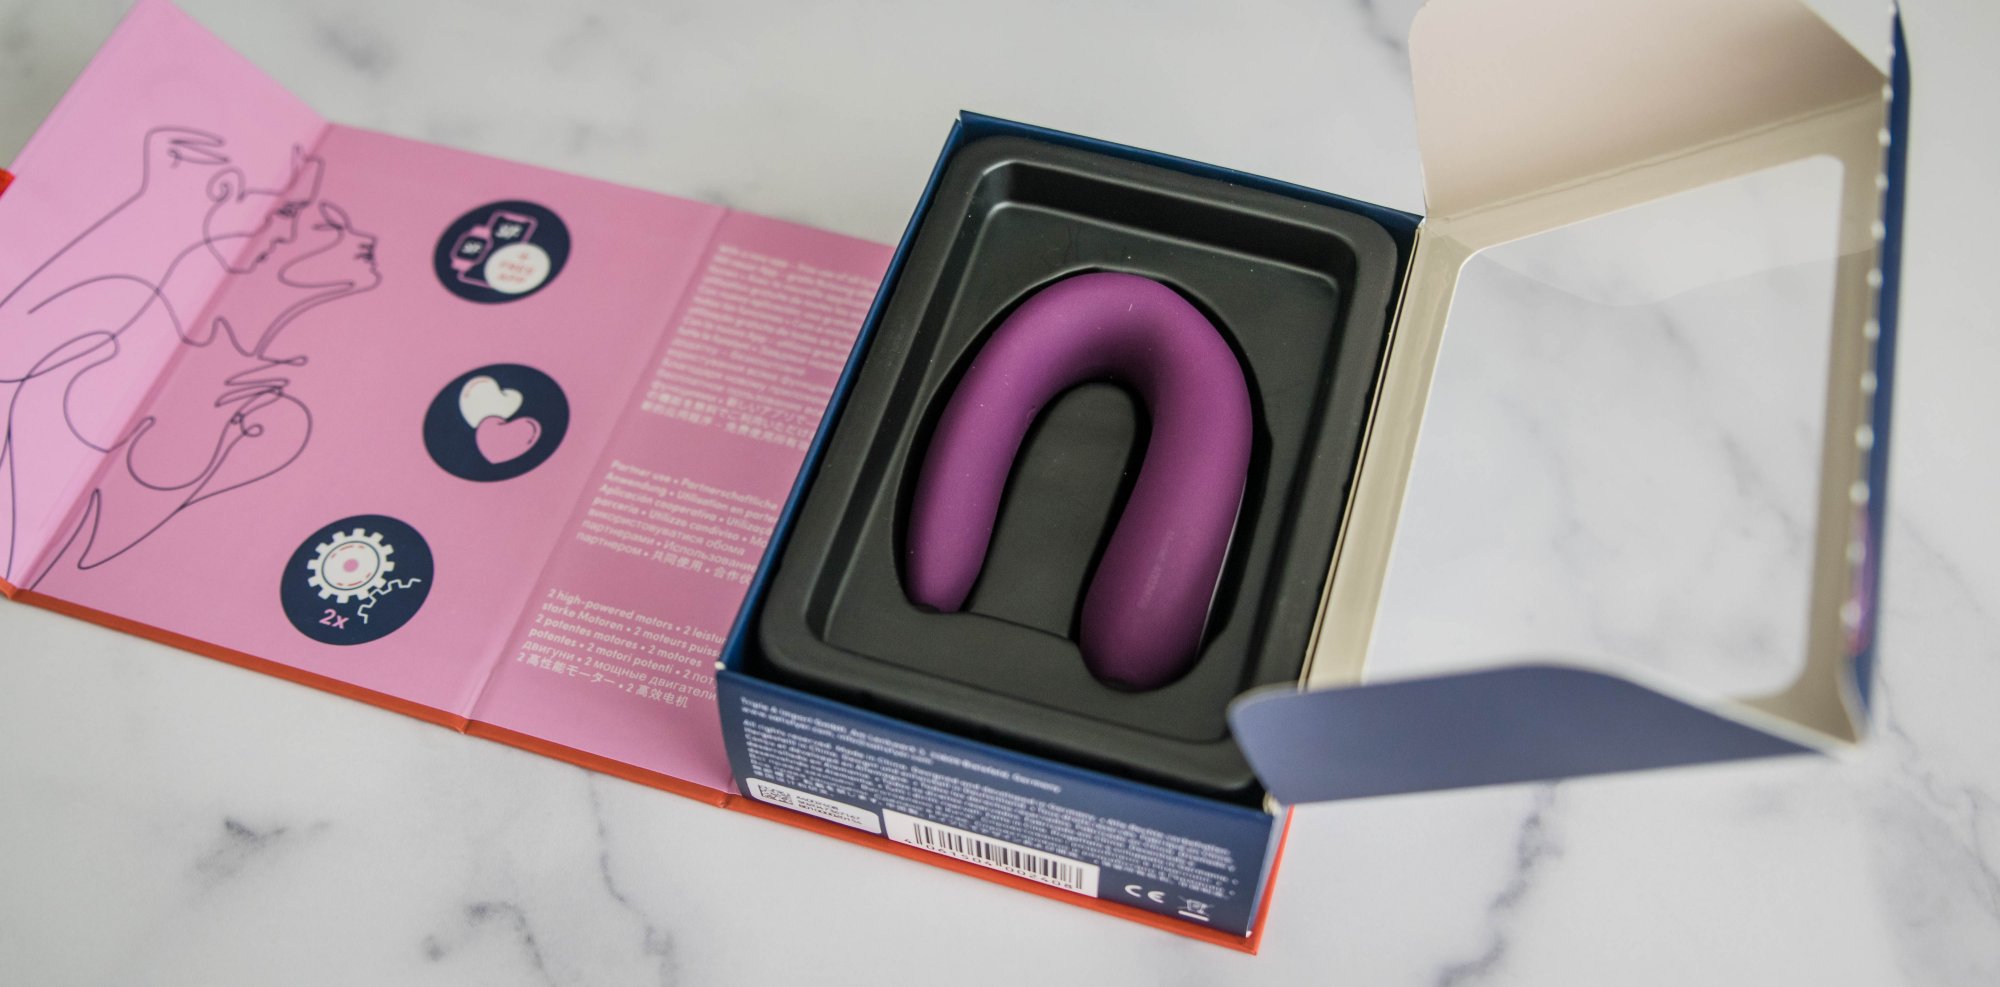 Satisfyer Double Joy: Sex Toy Review